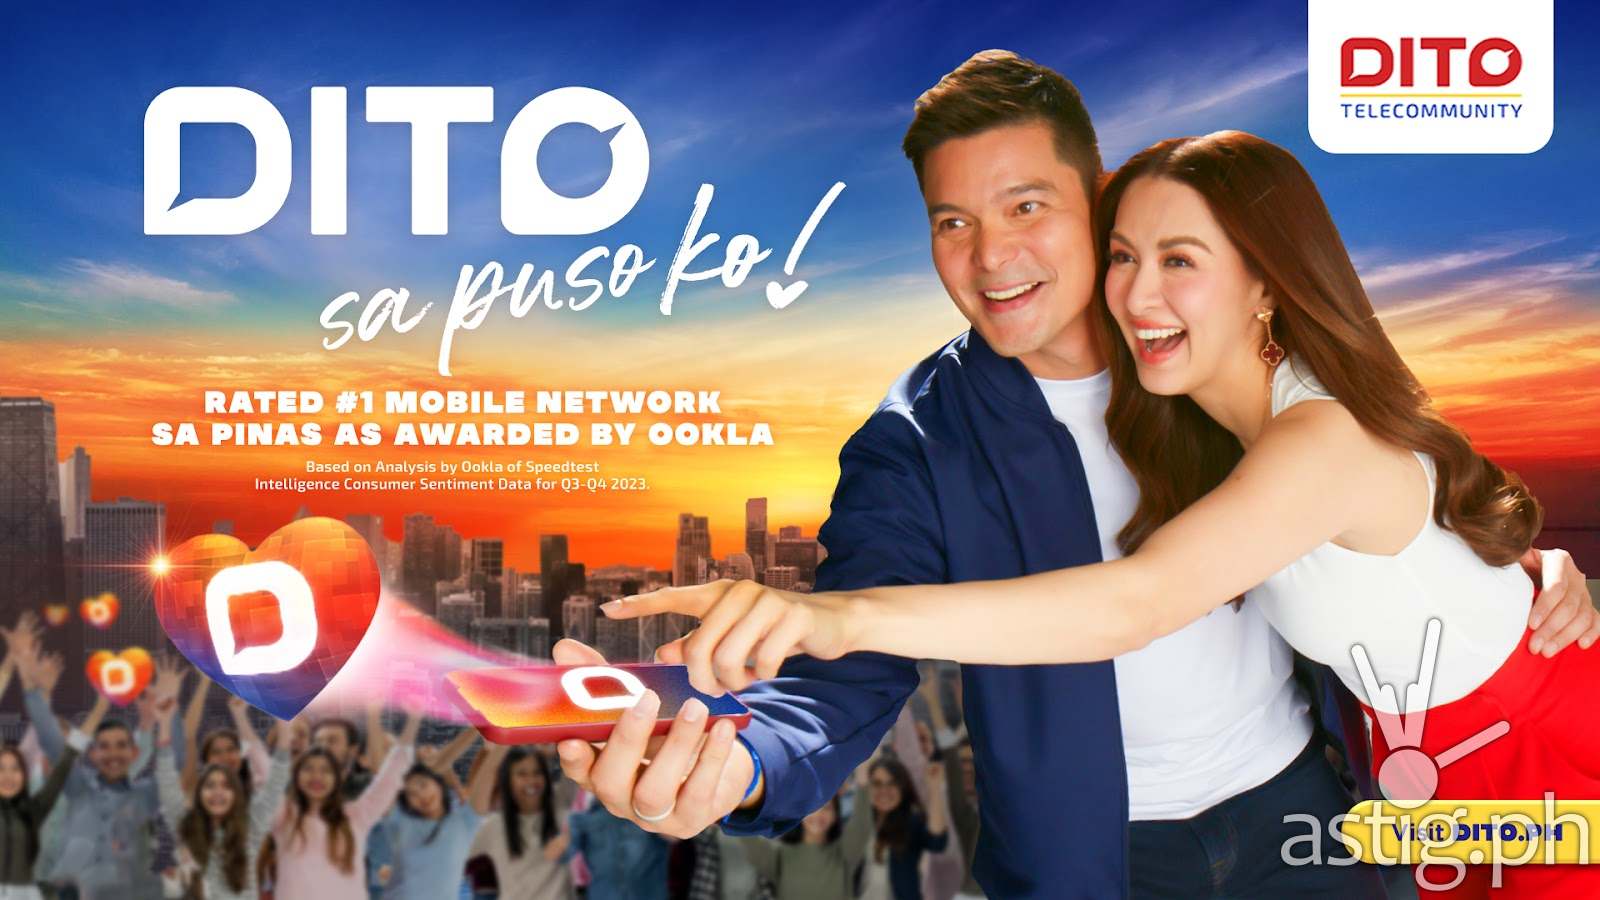 DITO Celebrates OOKLA Win with Latest Campaign “DITO SA PUSO KO” Featuring Power Couple Dingdong Dantes And Marian Rivera